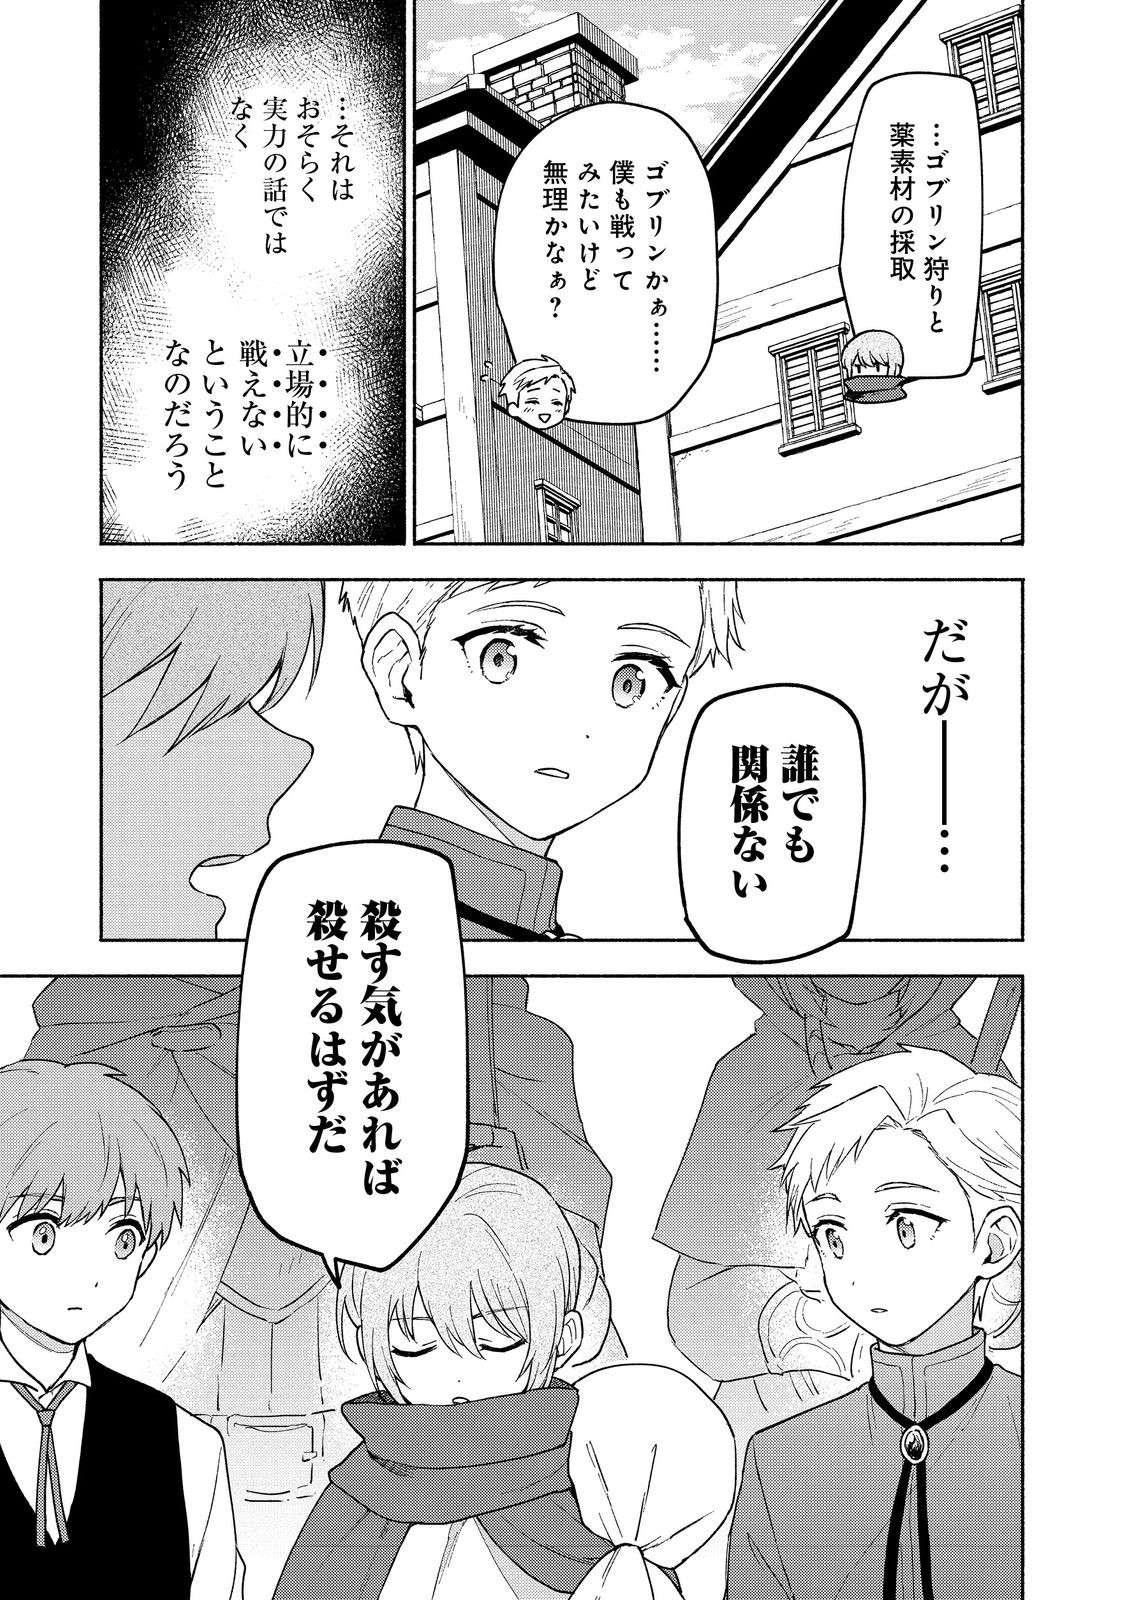 Otome Game no Heroine de Saikyou Survival - Chapter 22 - Page 13